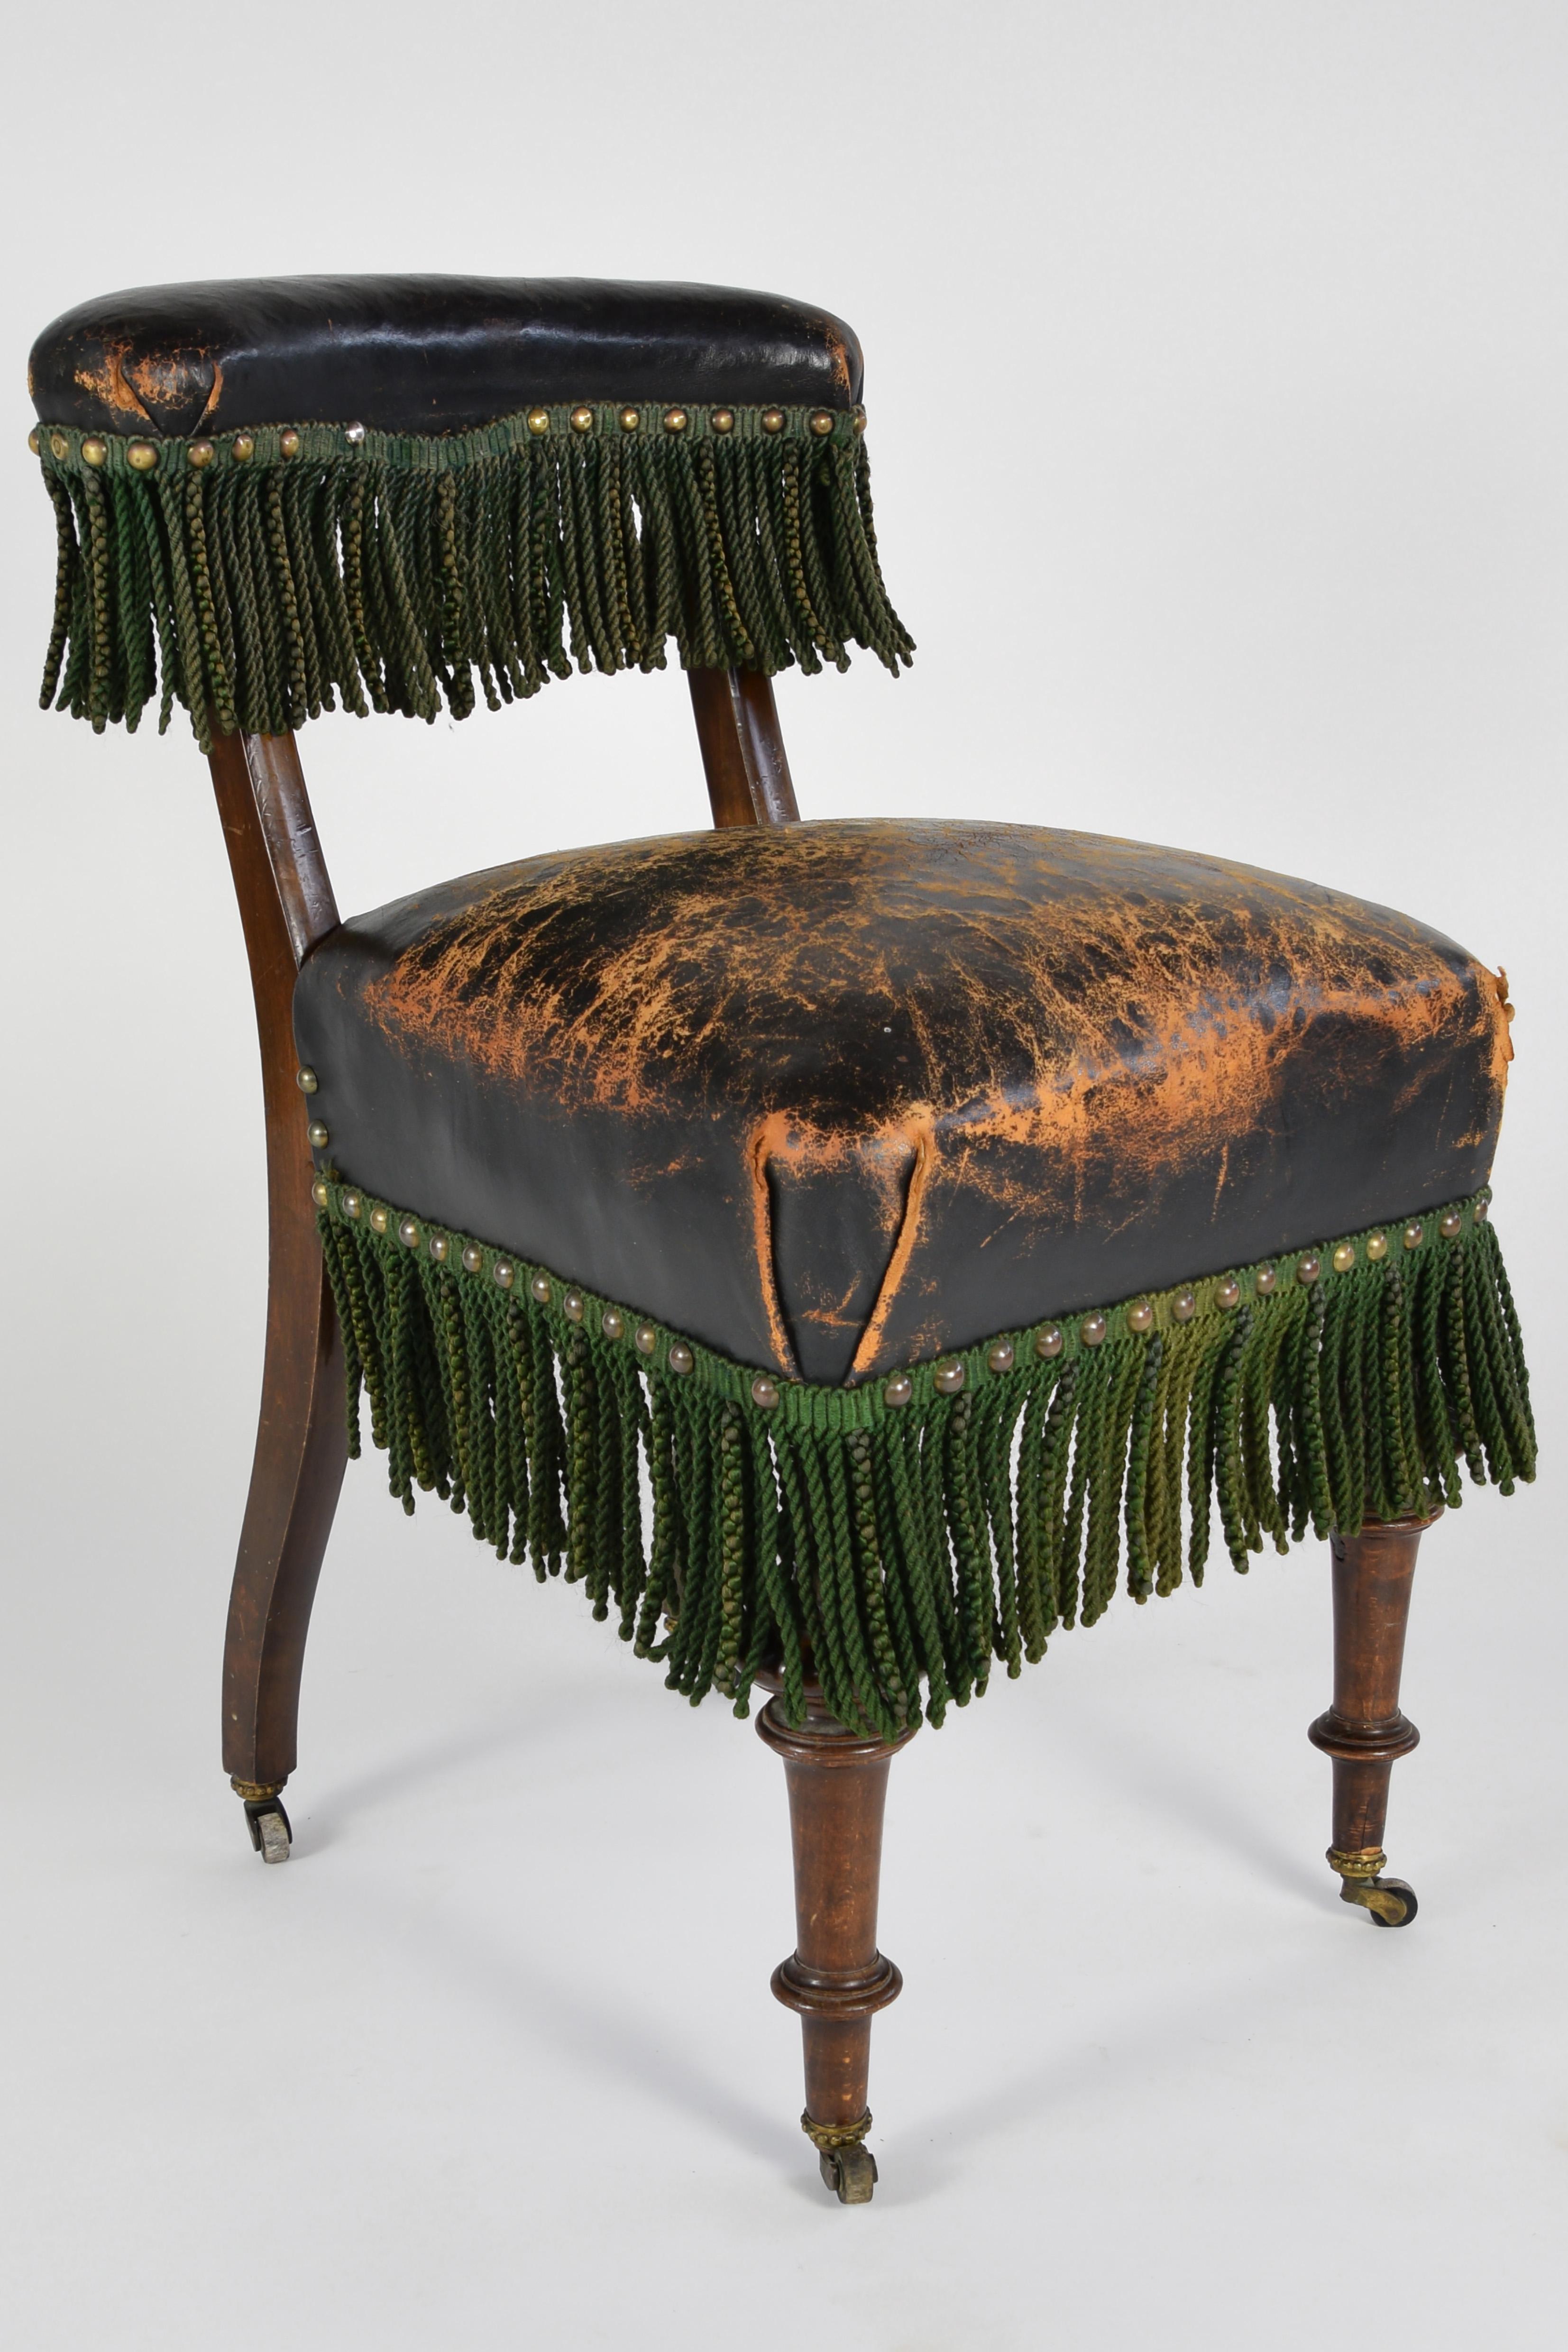 Attic Find: Lovely voyeuse chair, 